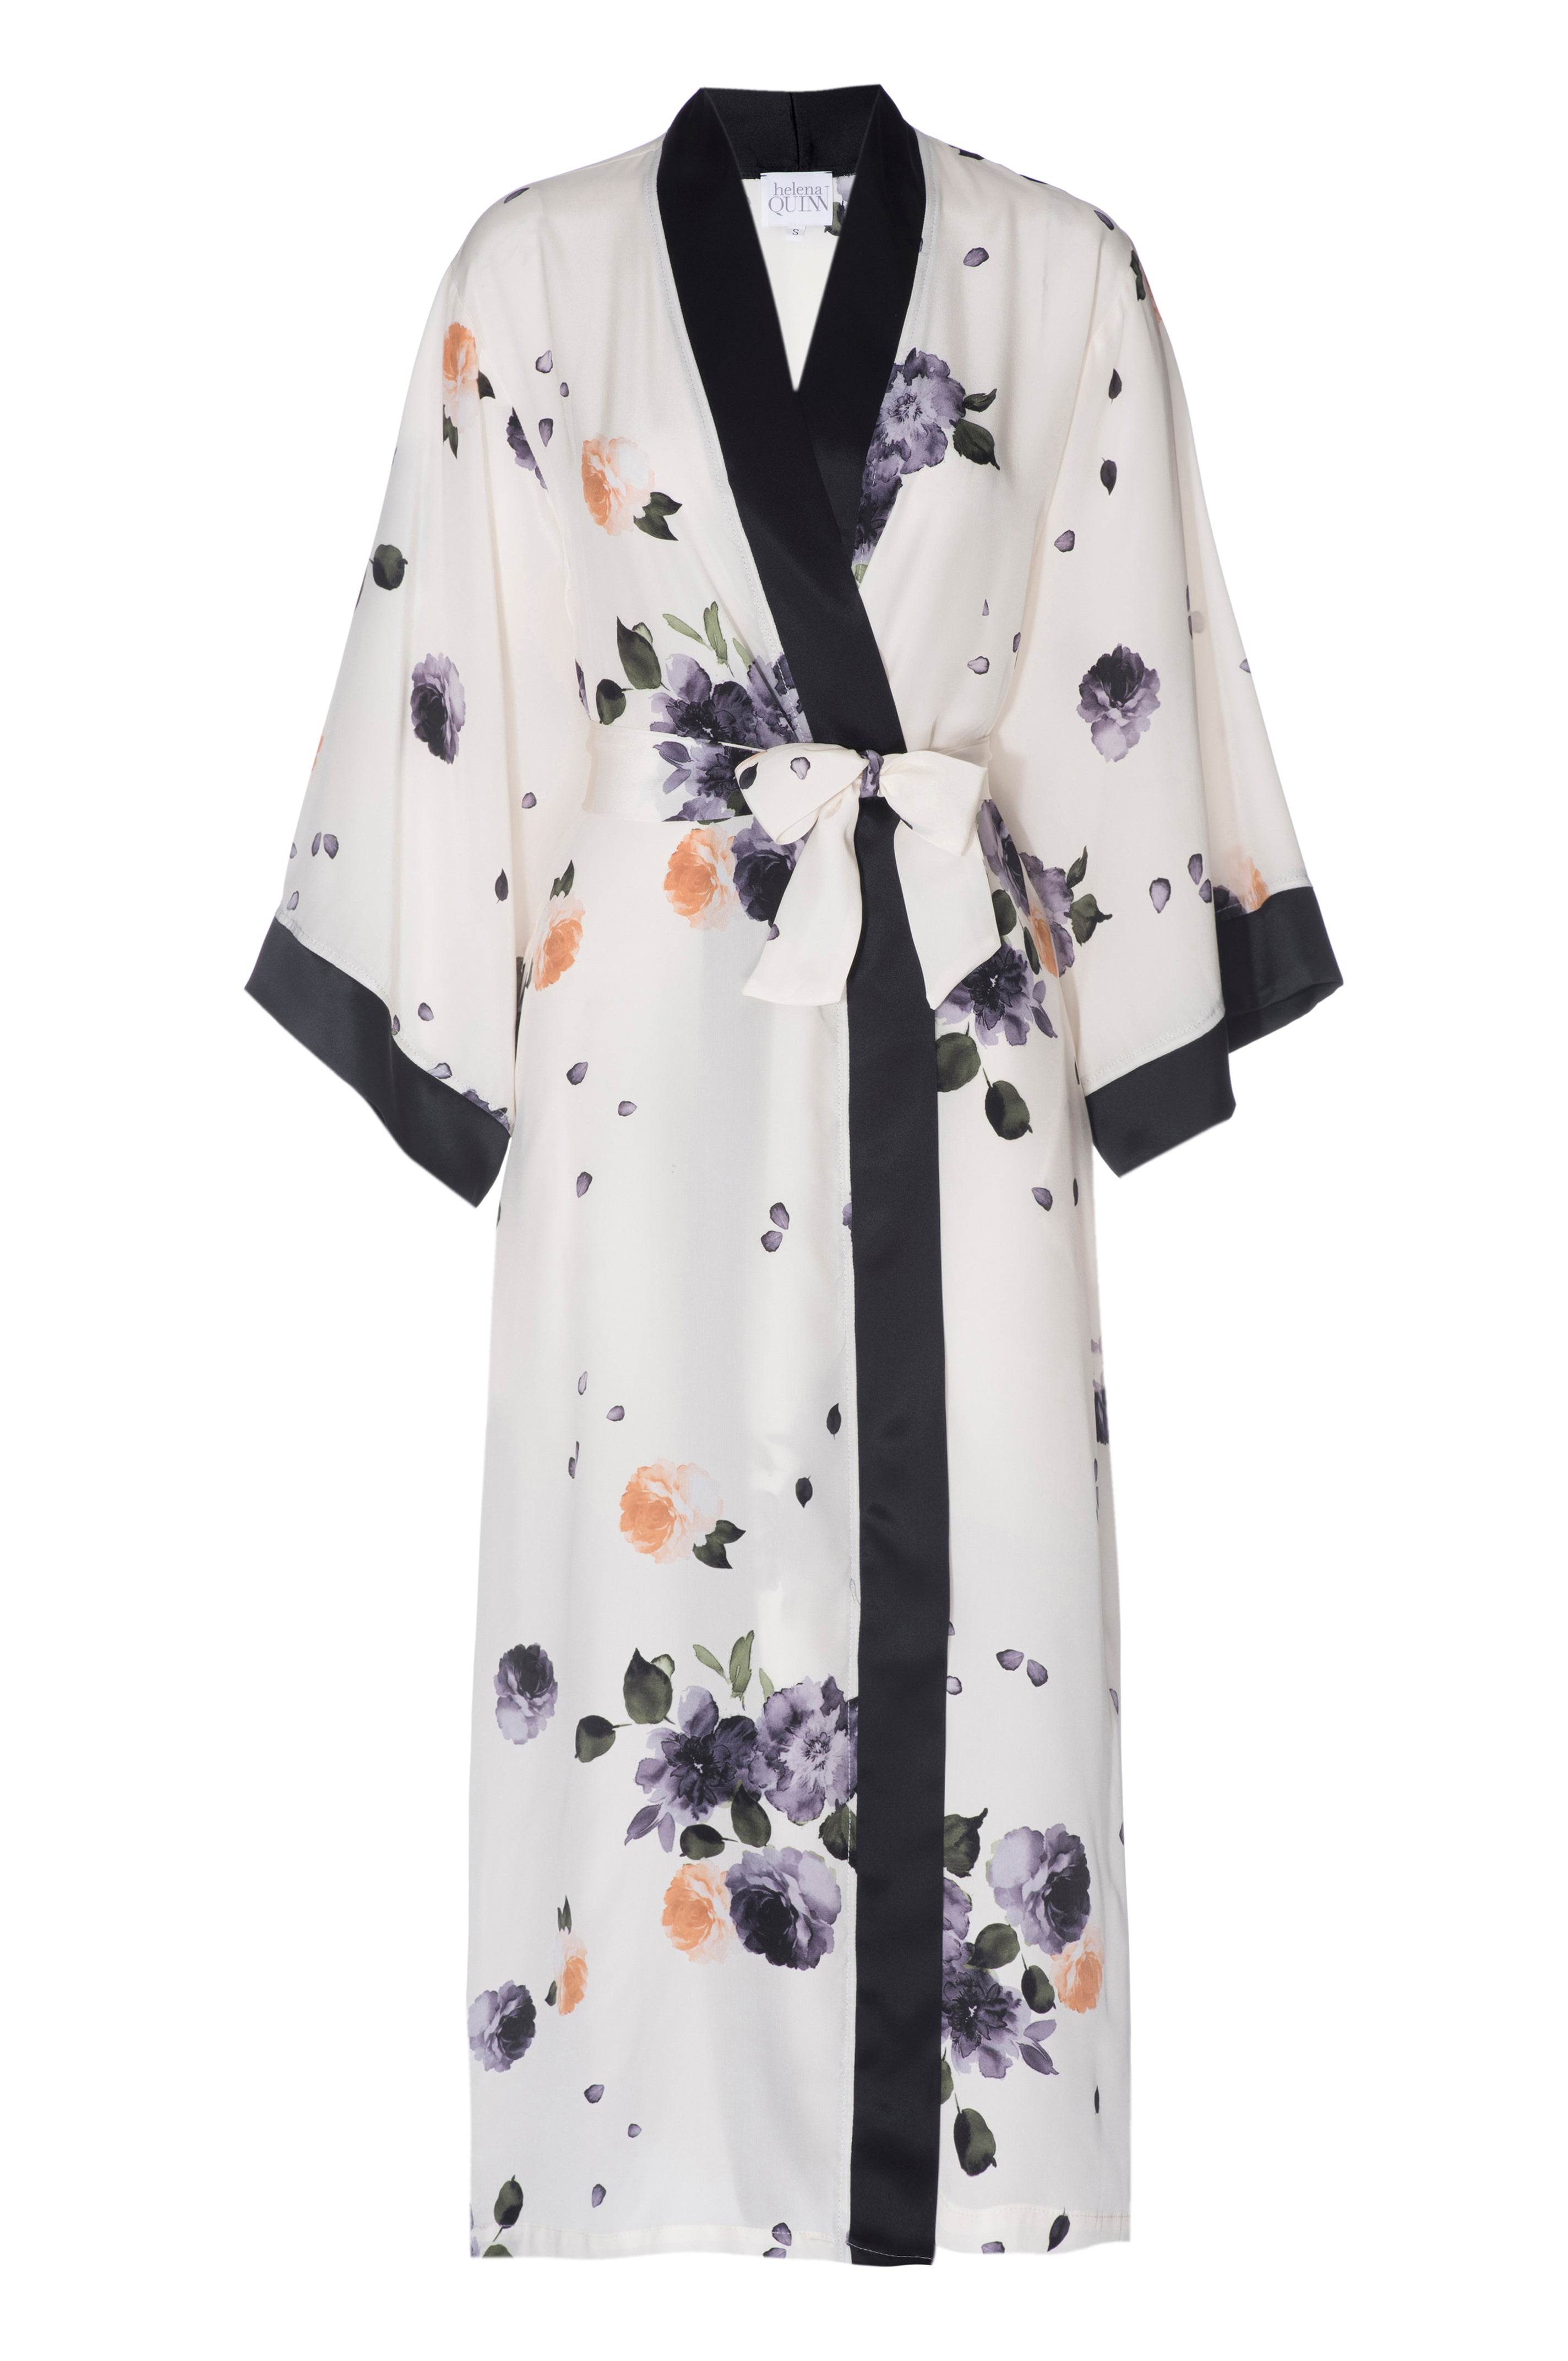 BEST SELLER: 'Garden' Floral Print Silk Robe with Black Silk Contrast-